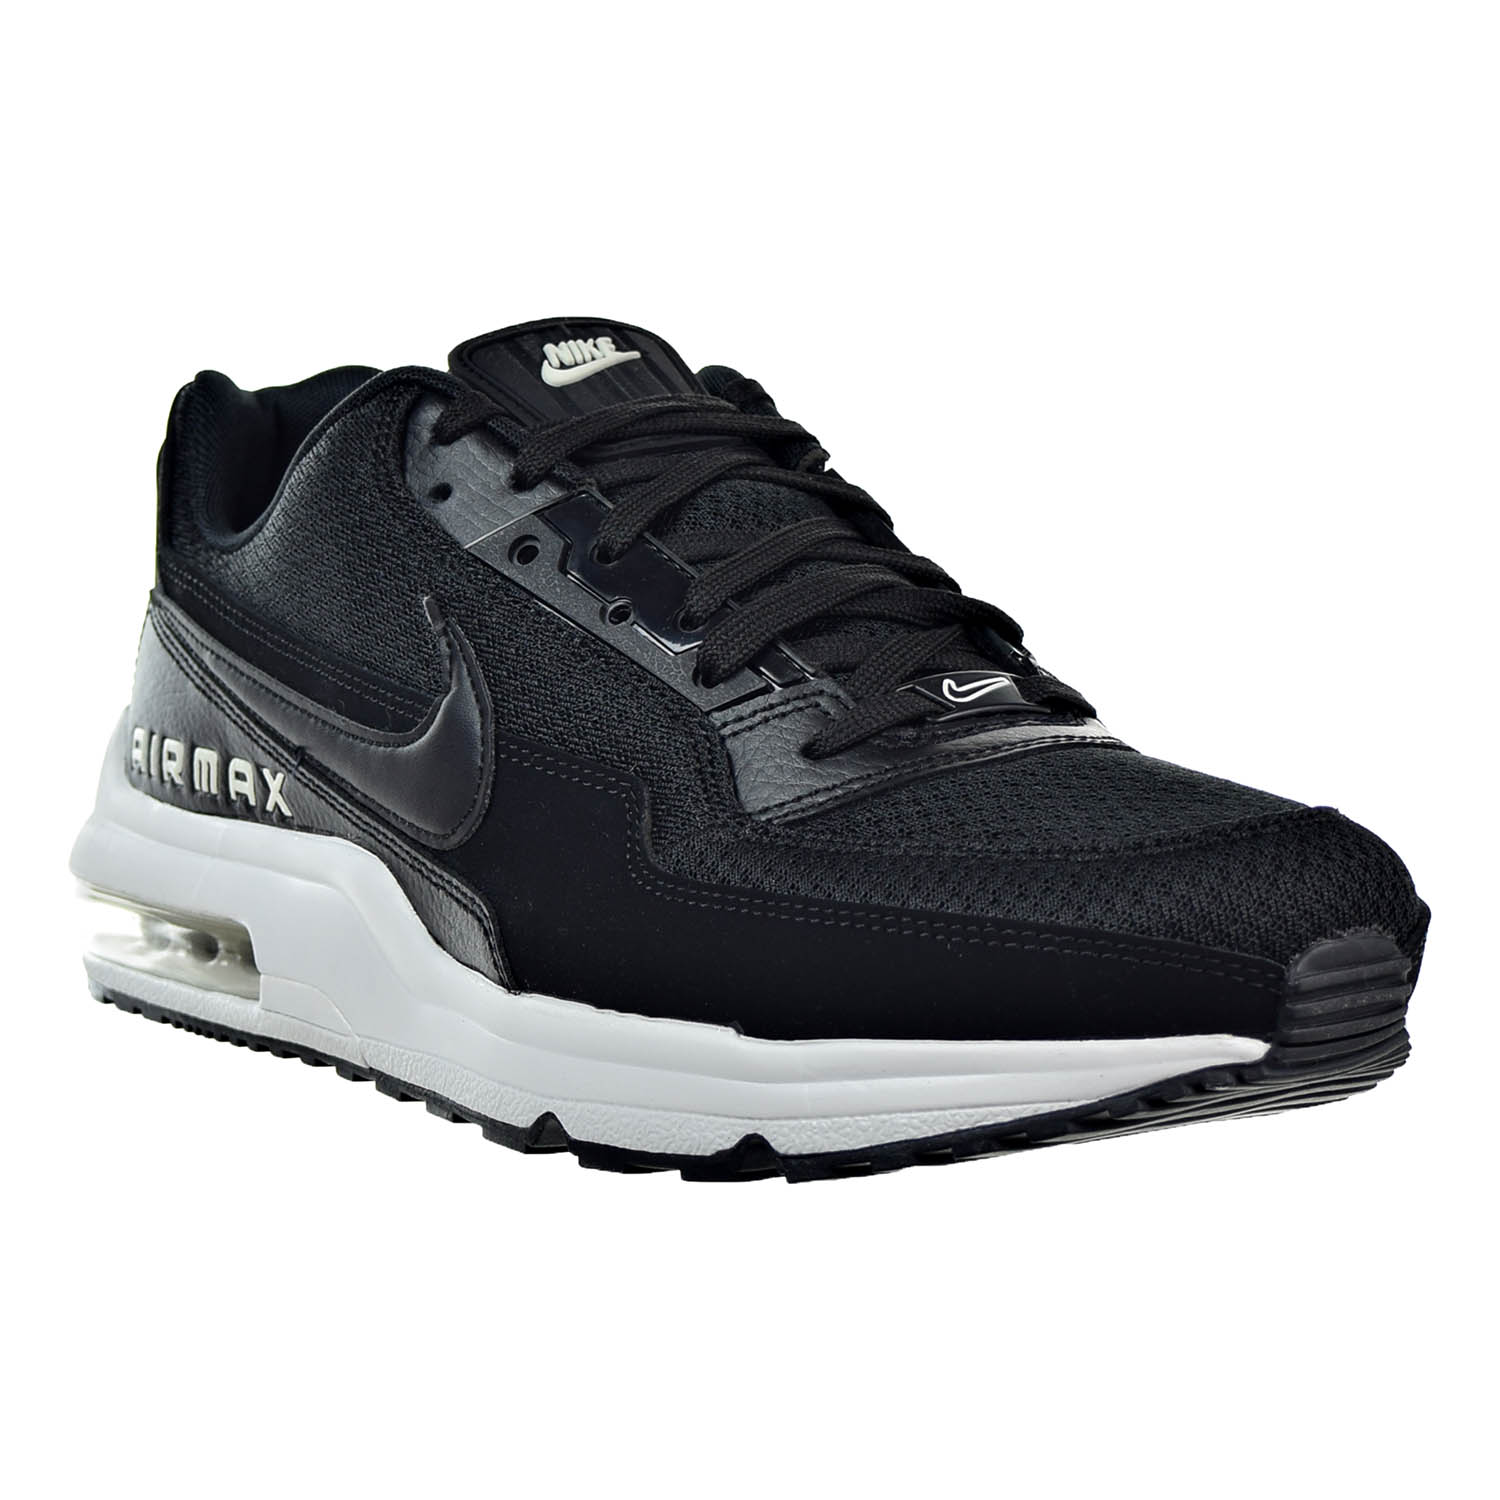 Nike Air Max LTD 3 Prem Men's Shoes Black-Black-Pale Grey 695484-005 | eBay